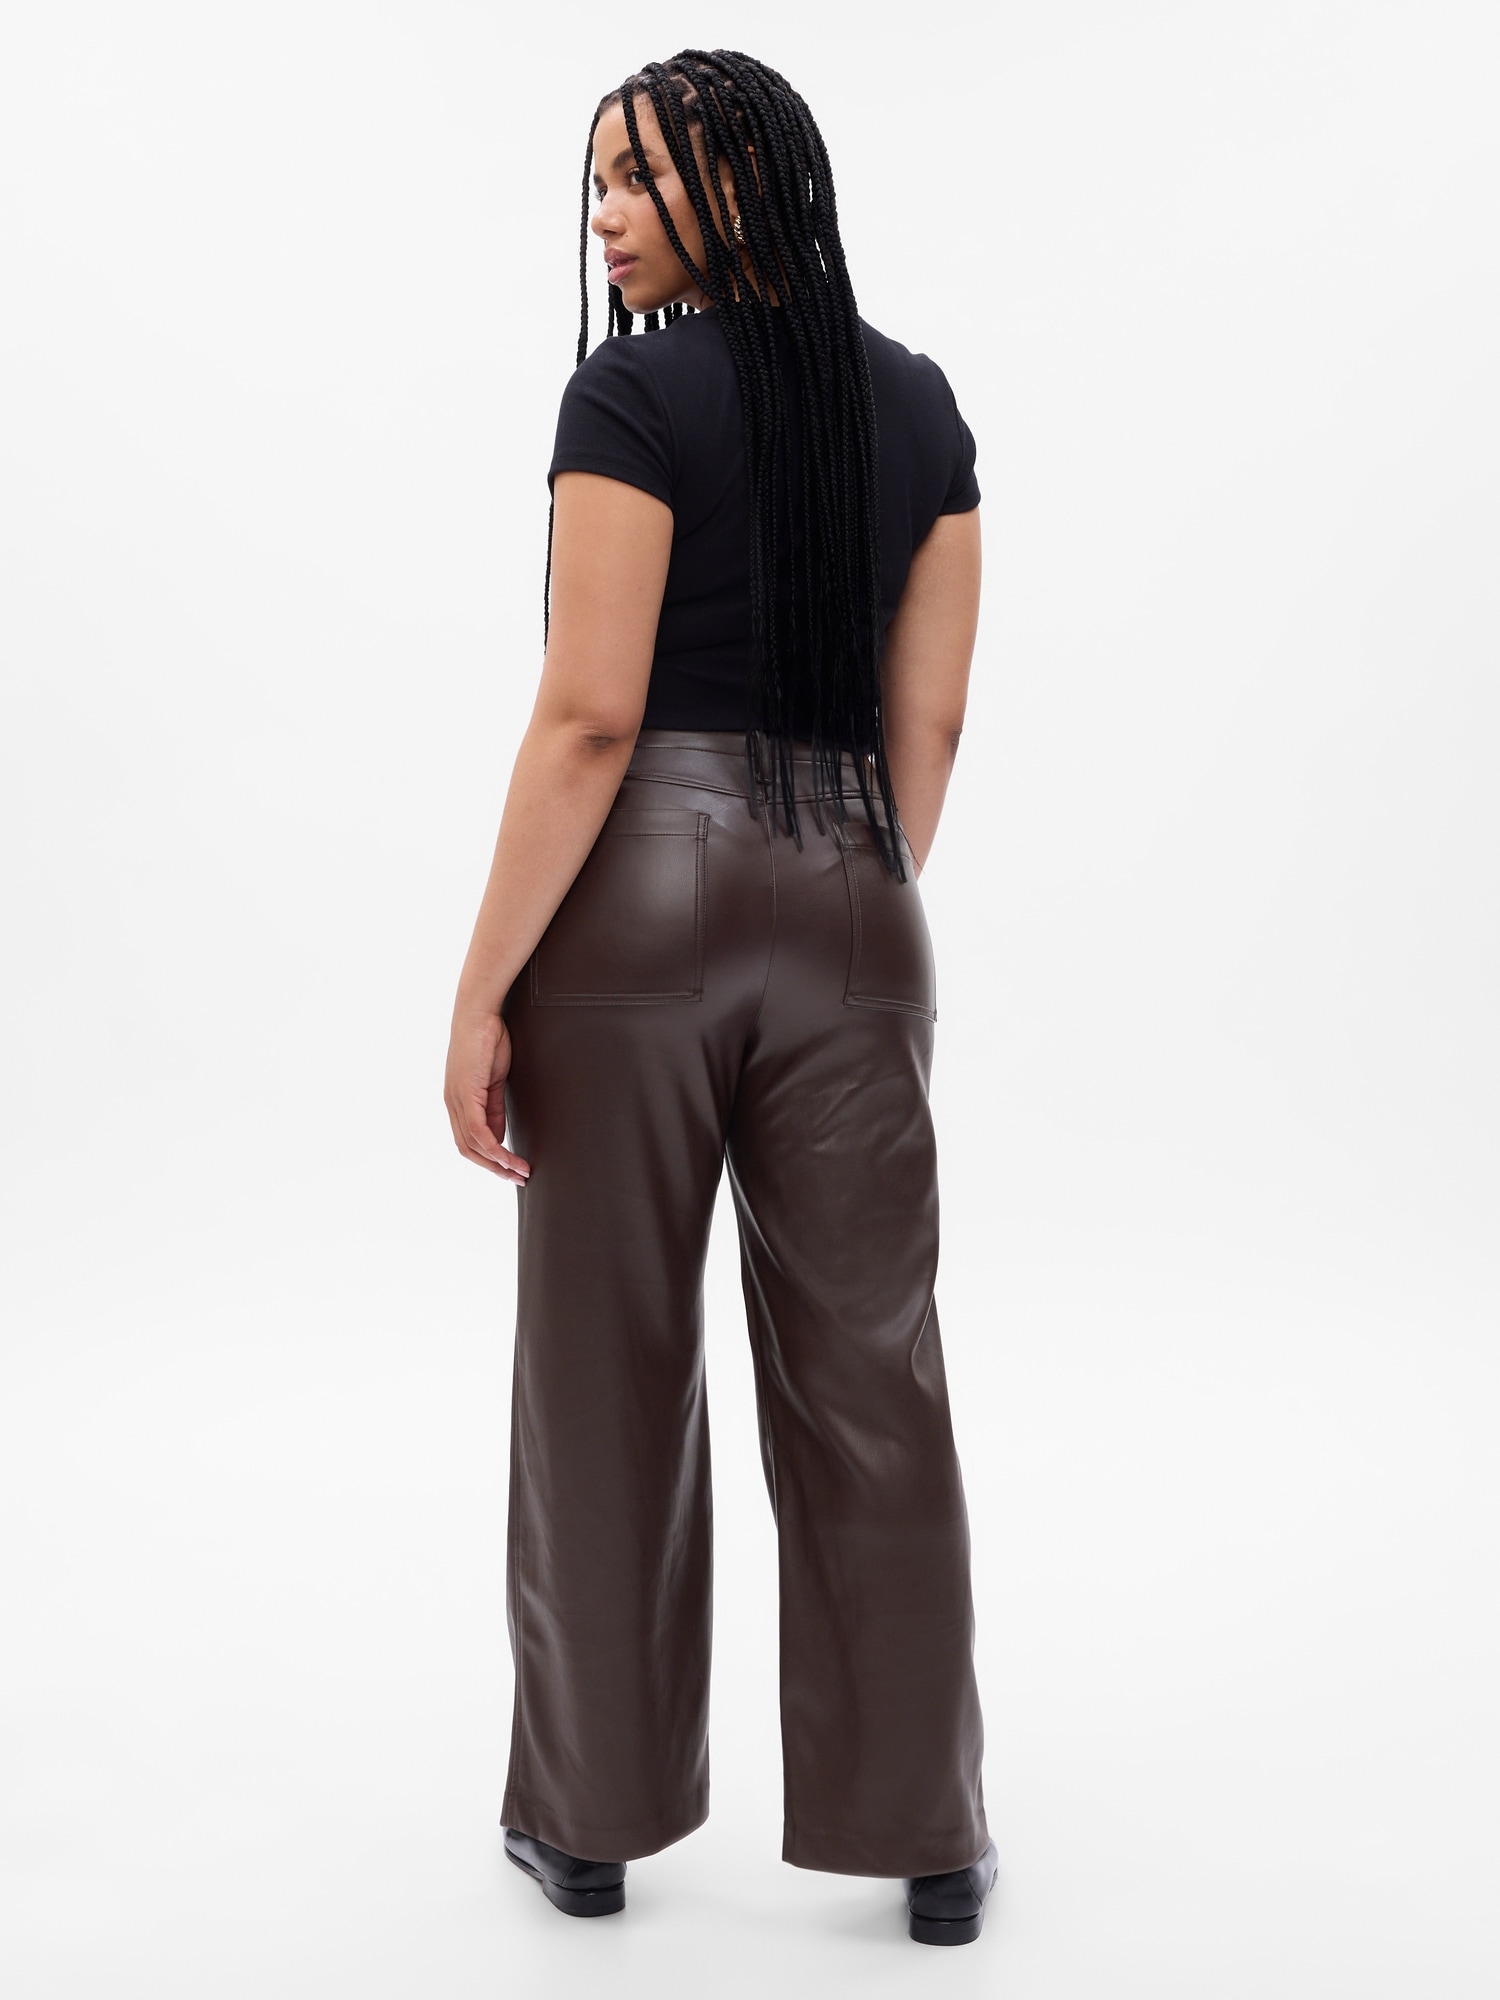 Vertigo Black Vegan Leather Pants